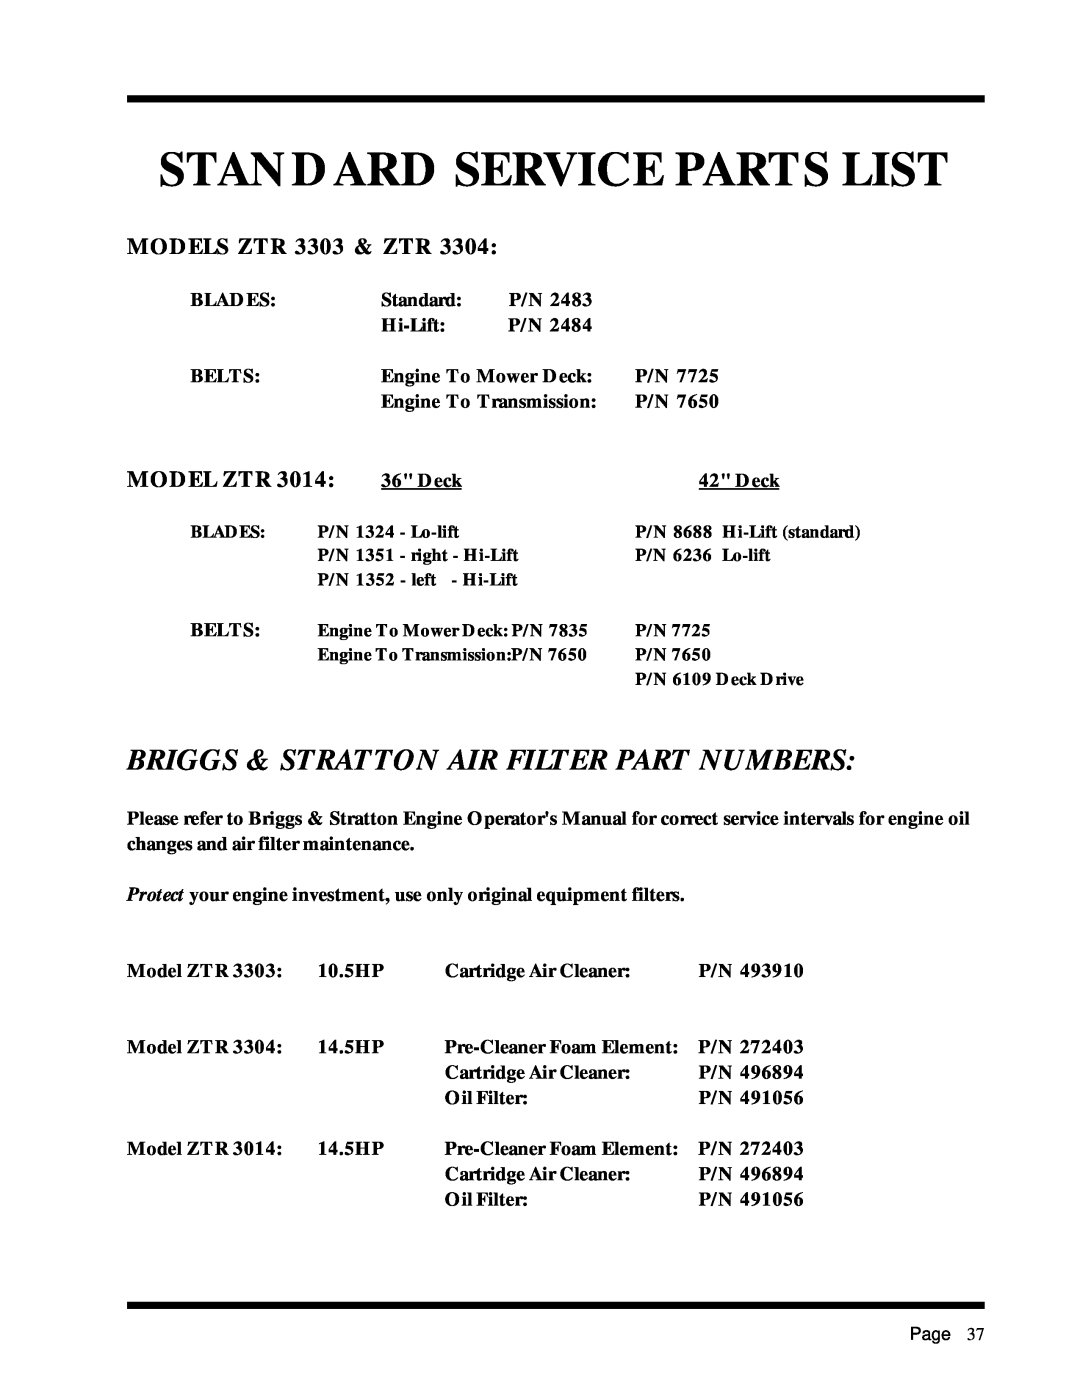 Dixon ZTR 2301 manual Standard Service Parts List, Briggs & Stratton Air Filter Part Numbers 